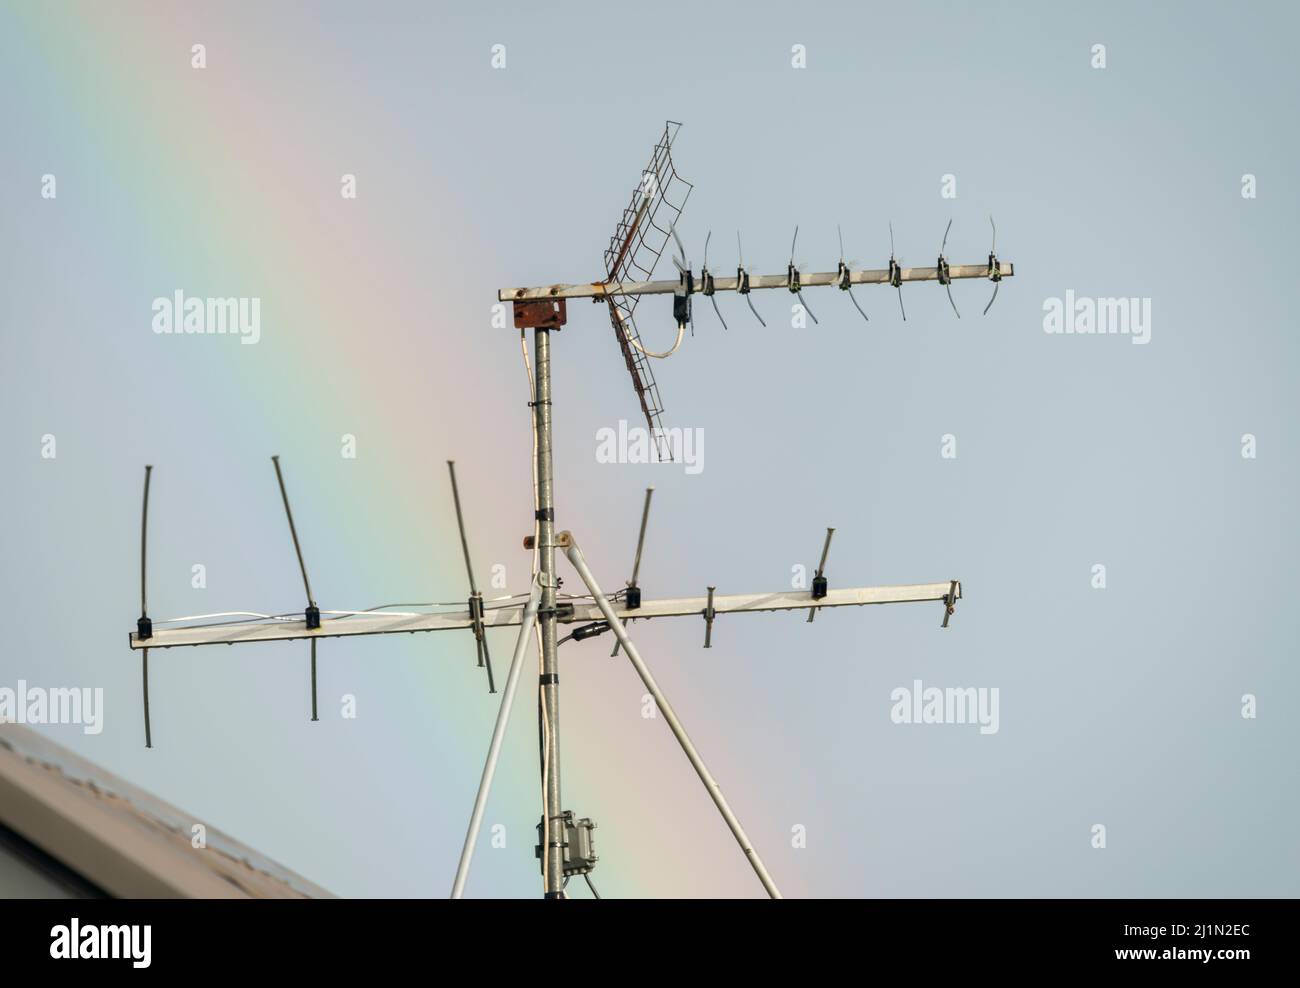 TV antenna on the rooftop of a house, against a rainbow across the sky. Stock Photo